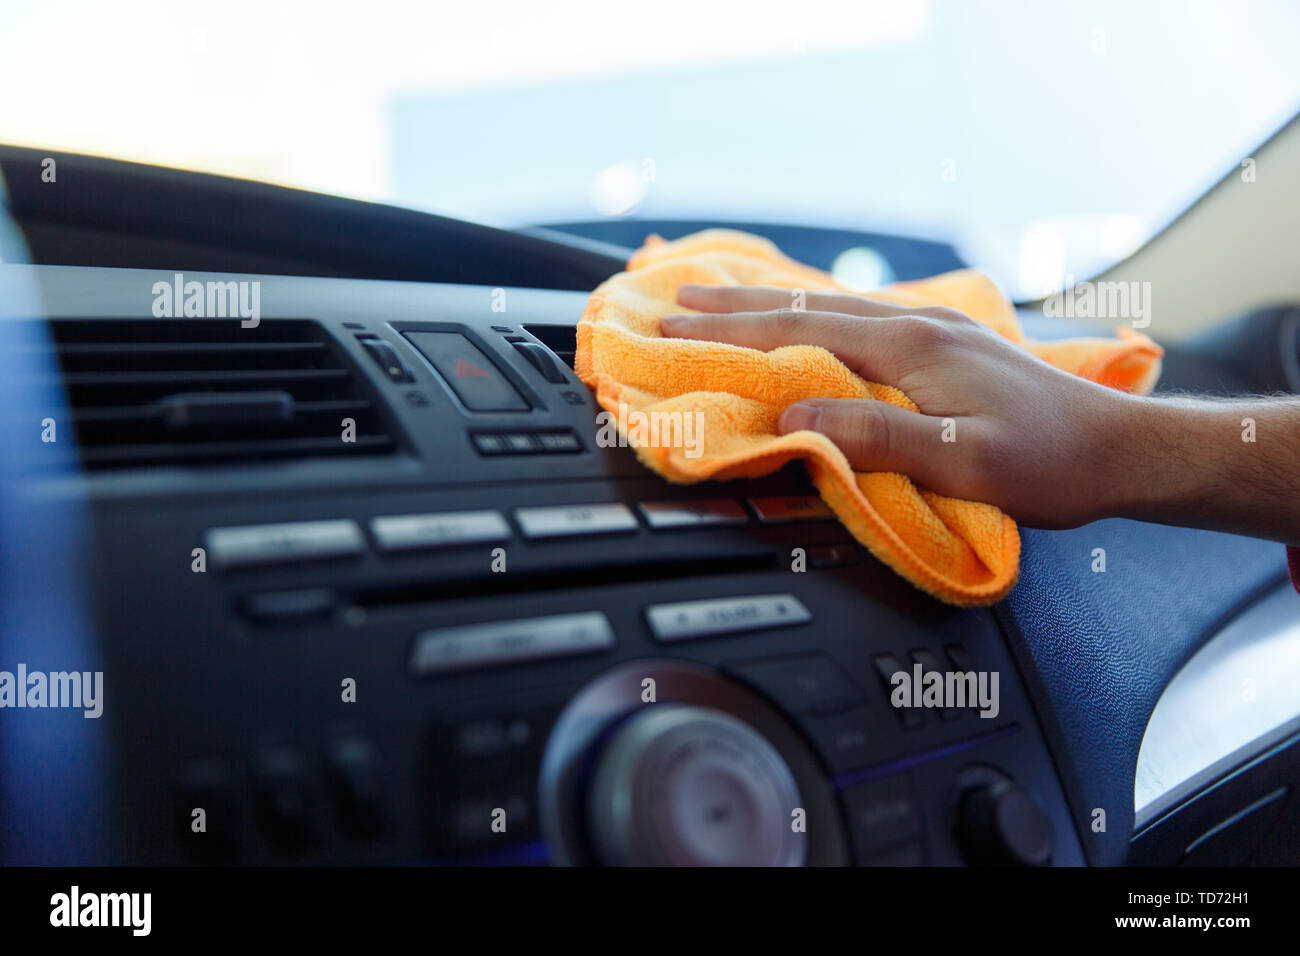 Image Of Male S Hand With Orange Rag Washing Car Interior